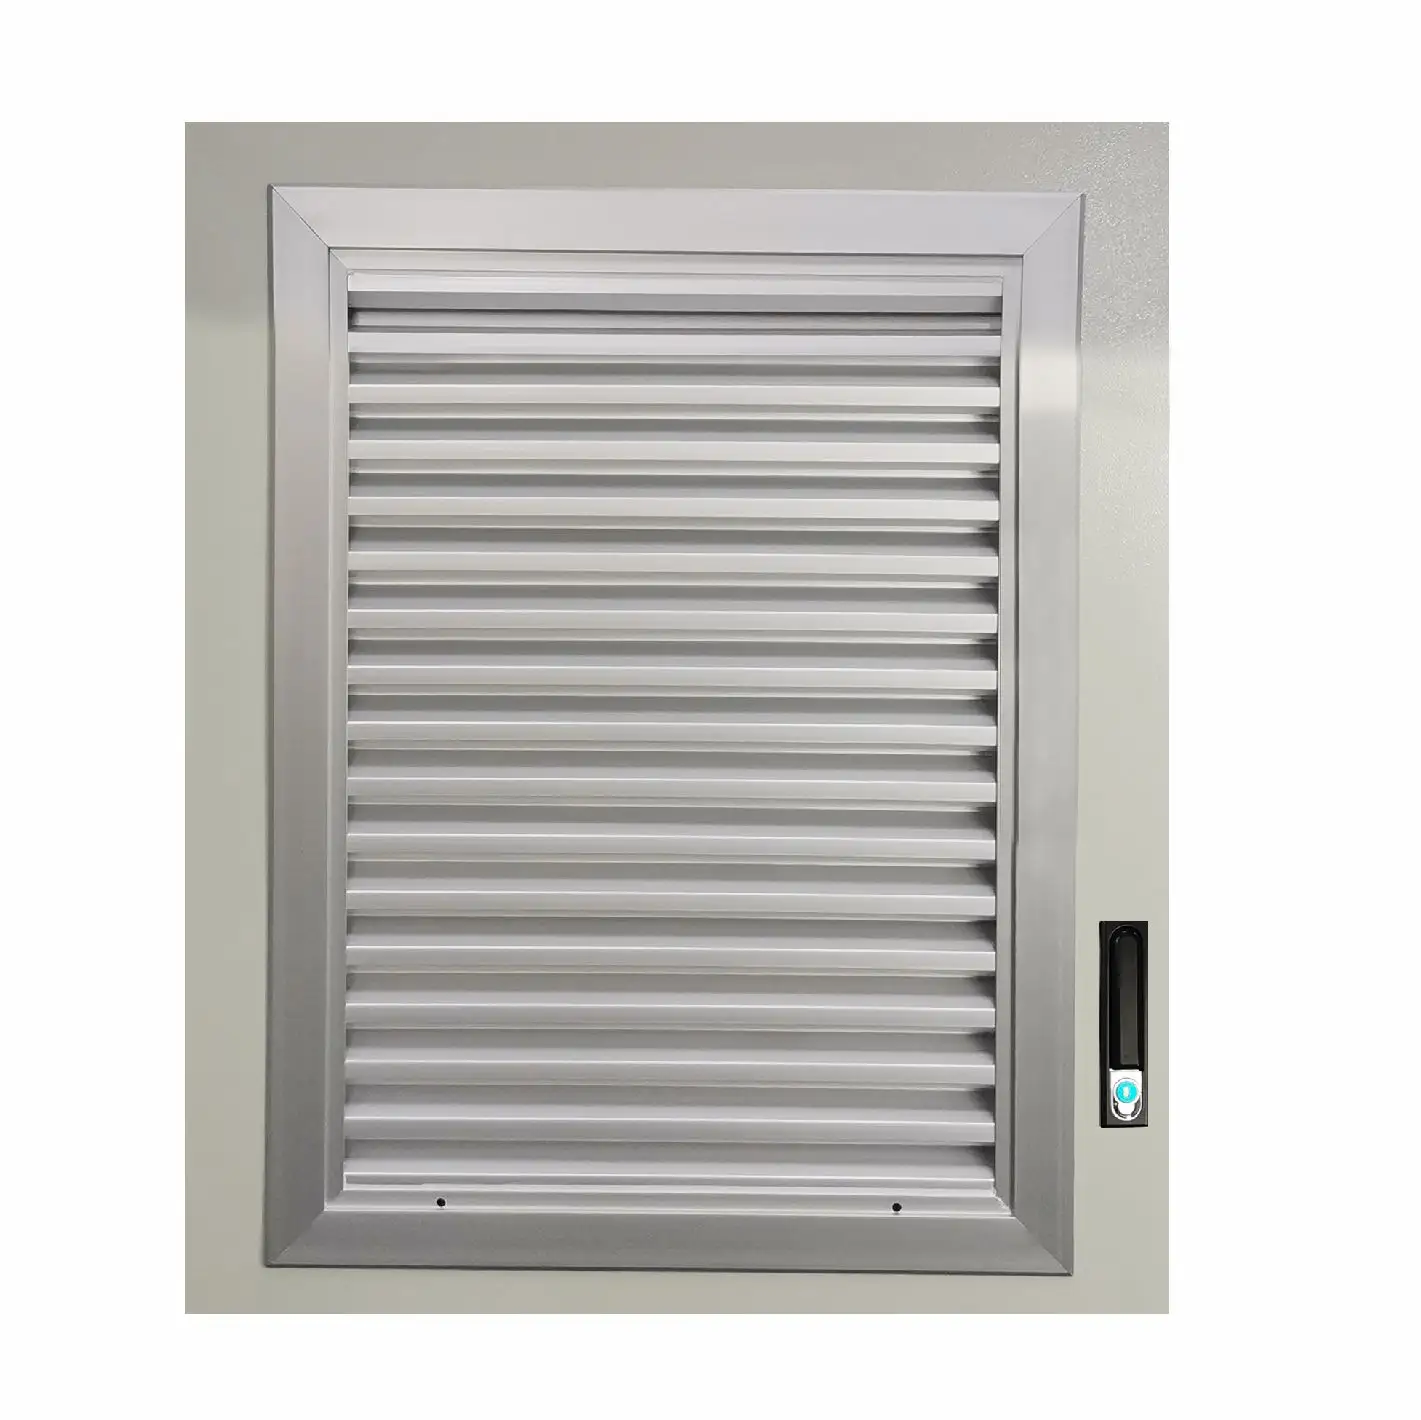 Aluminum Louver weatherproof dust filter Photovoltaic inverter ventilation device for equipment cabinet